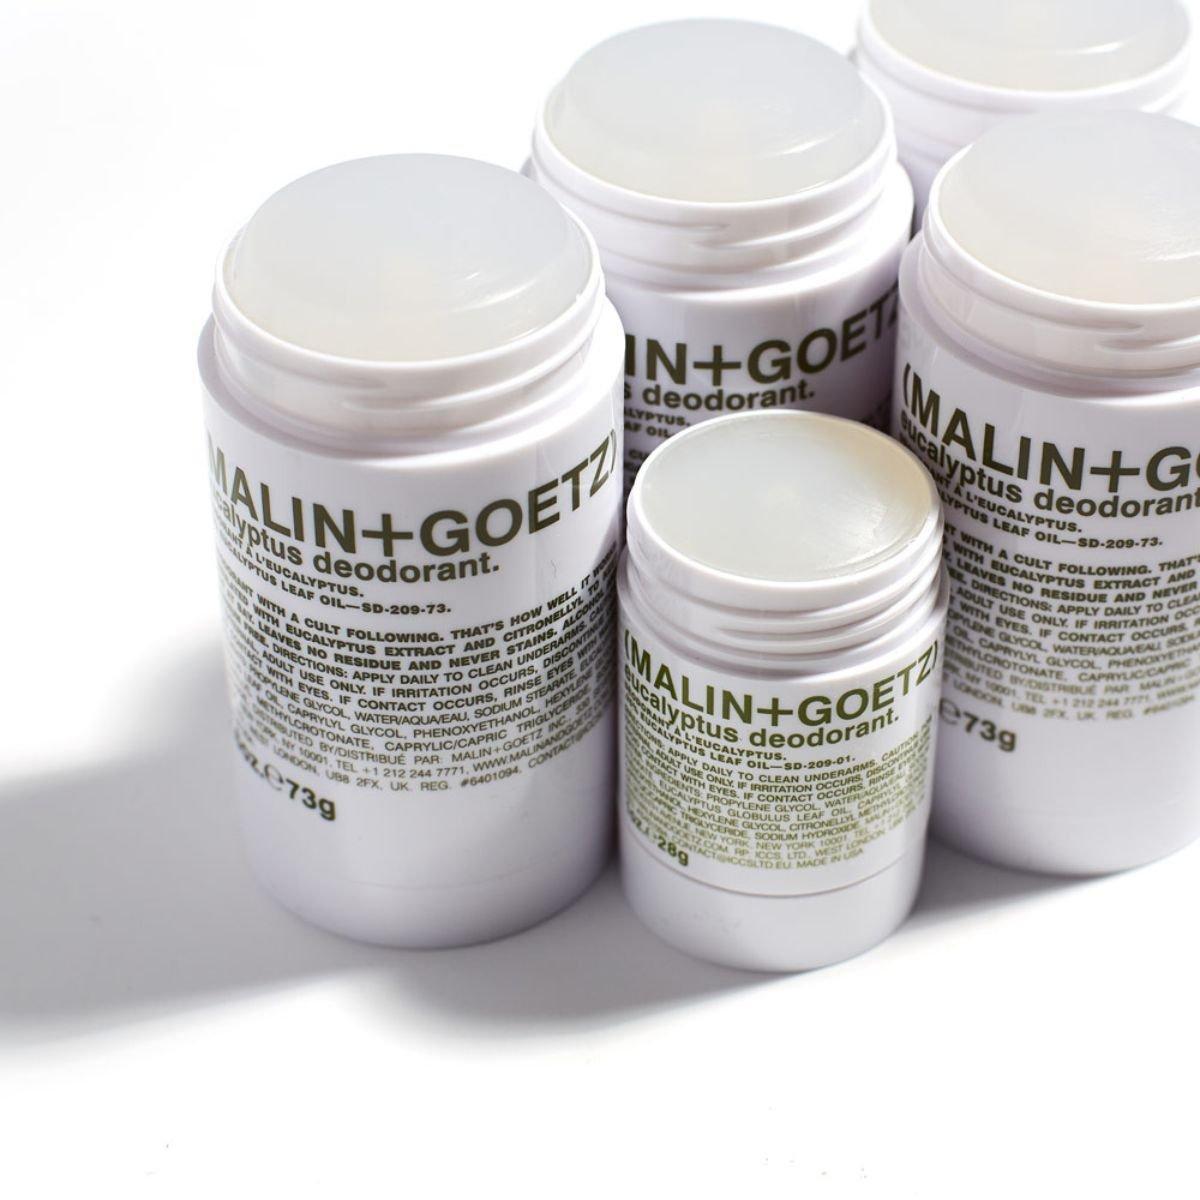 Image of Malin + Goetz - Eucalyptus deodorant mini and original